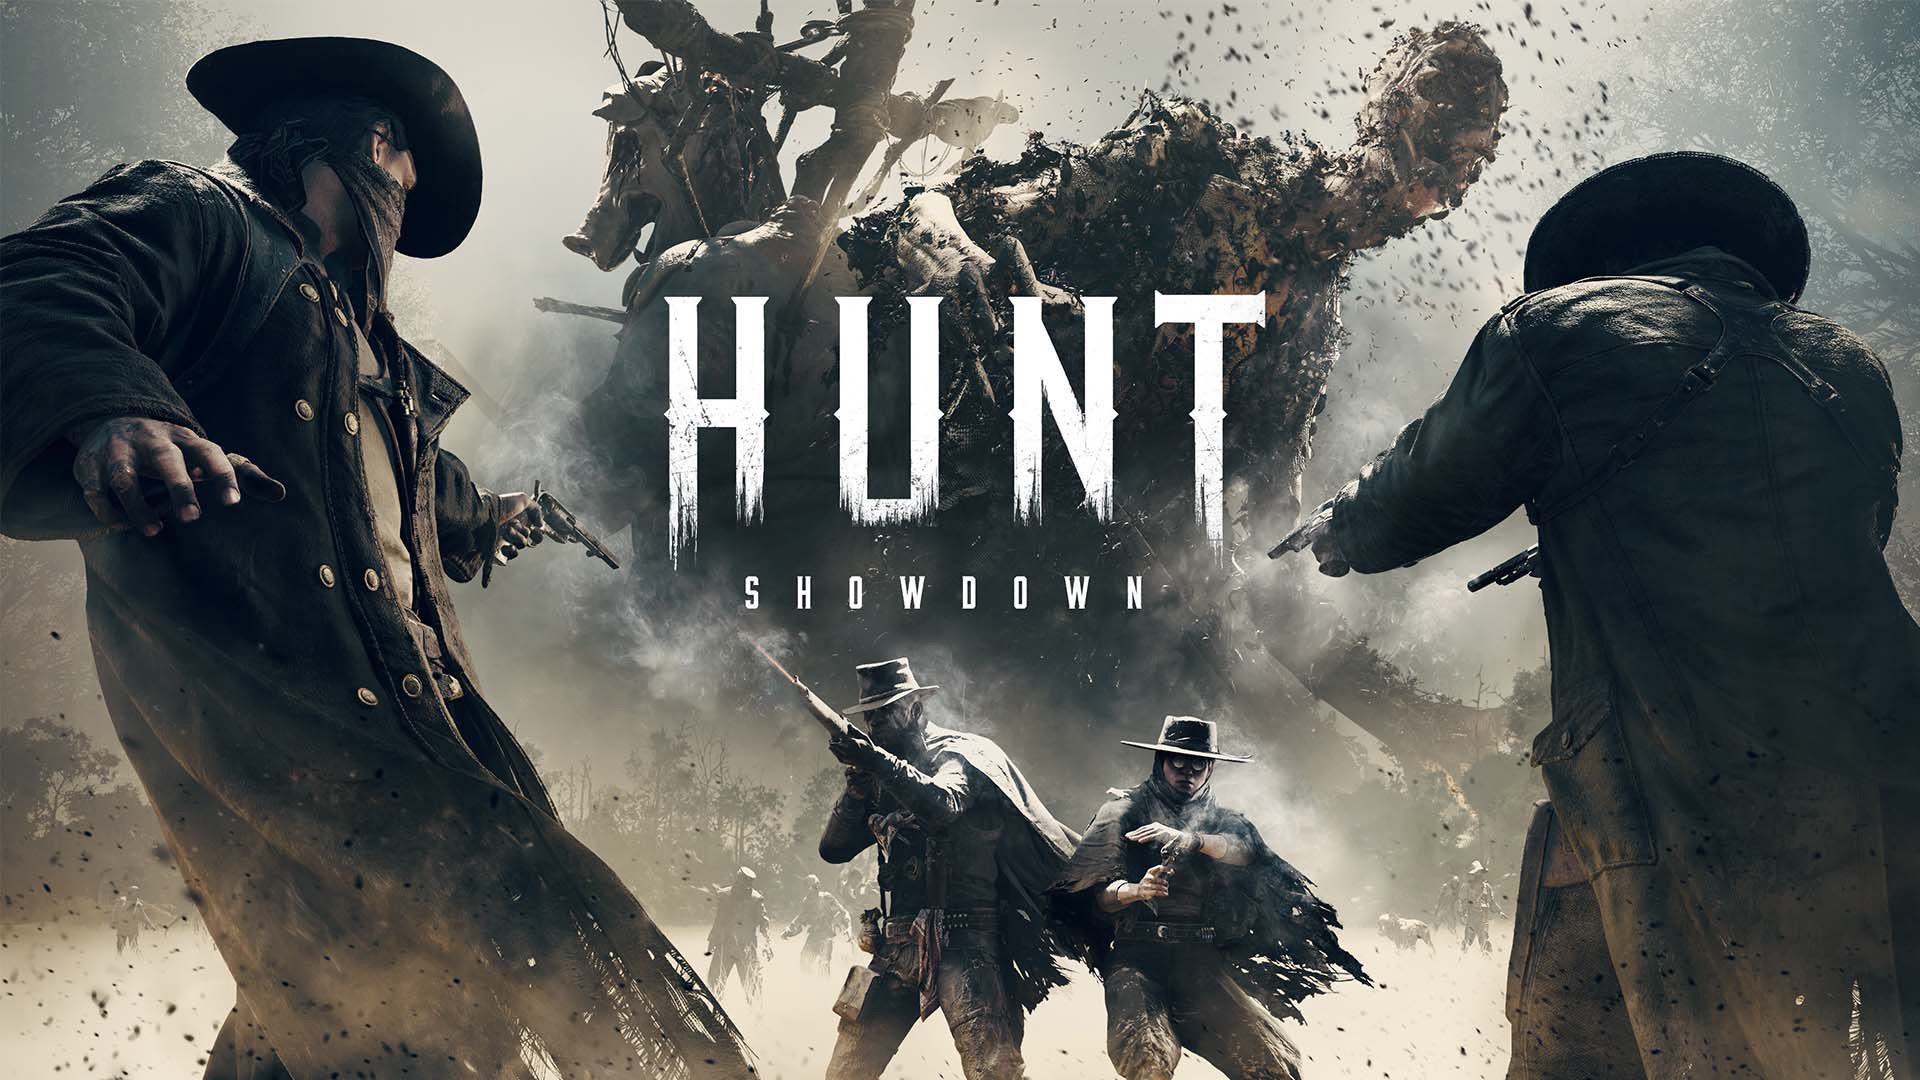 Take a Trip to the Bayou as a Bounty Hunter in Hunt: Showdown